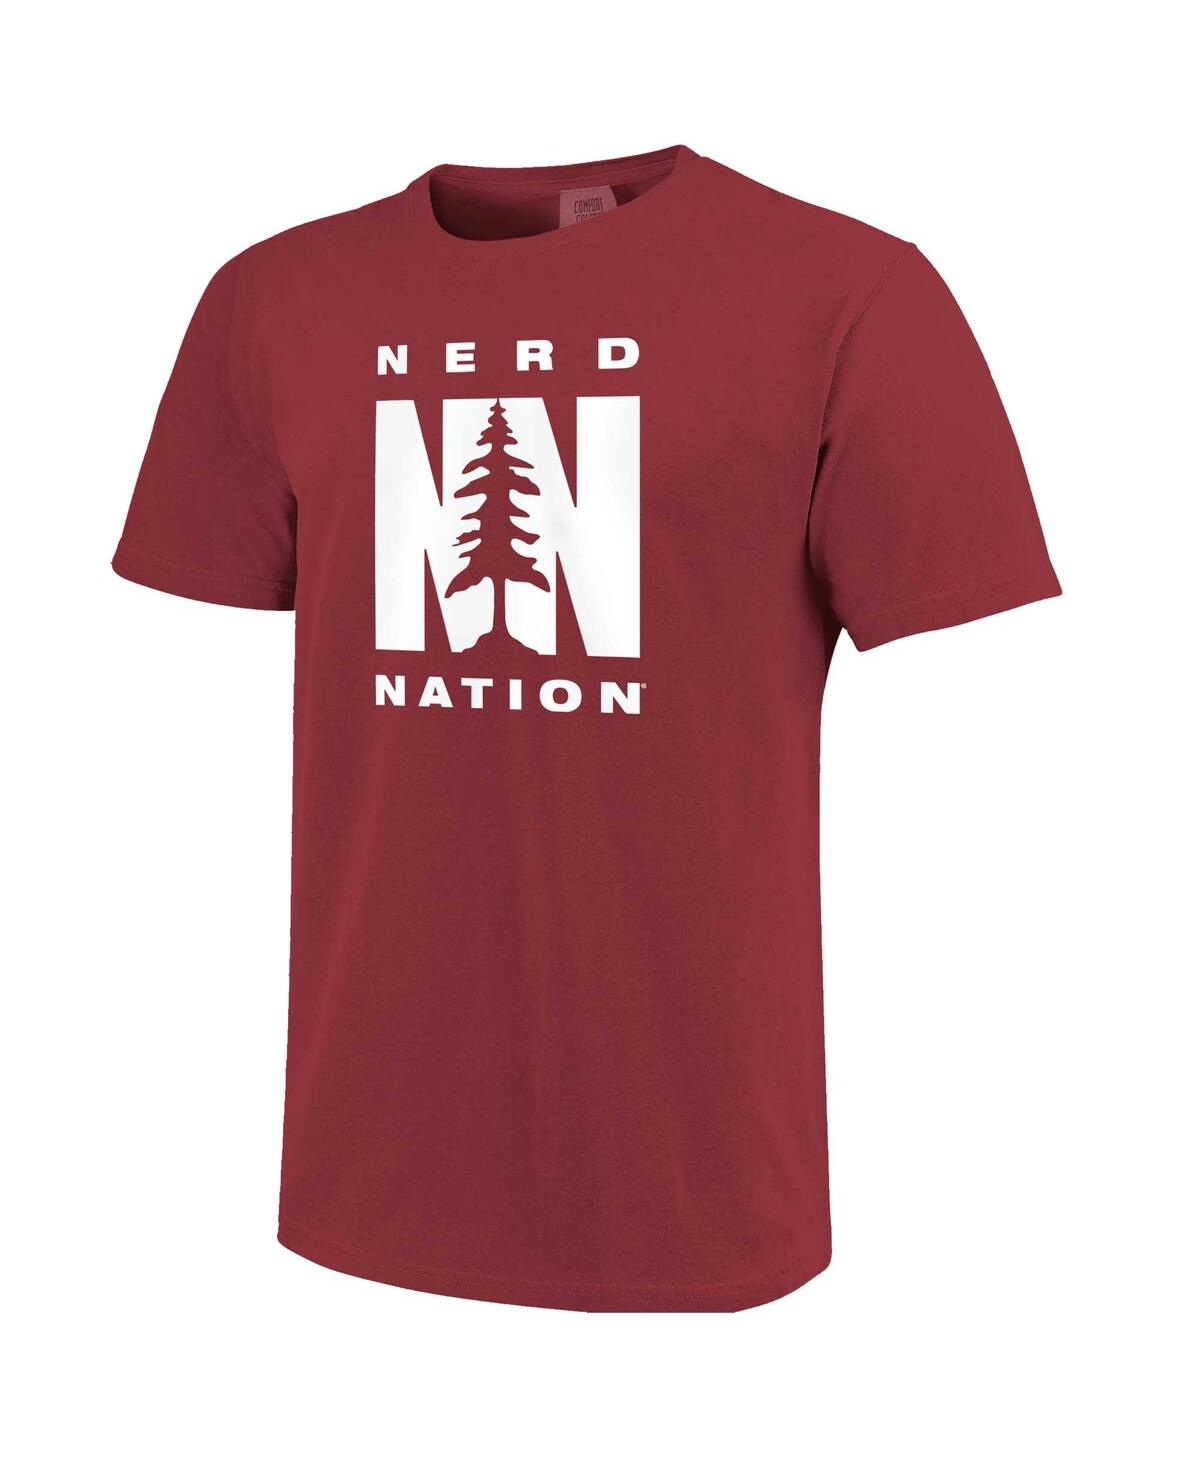 Shop Image One Men's Cardinal Stanford Cardinal Nerd Nation Comfort Colorâ T-shirt